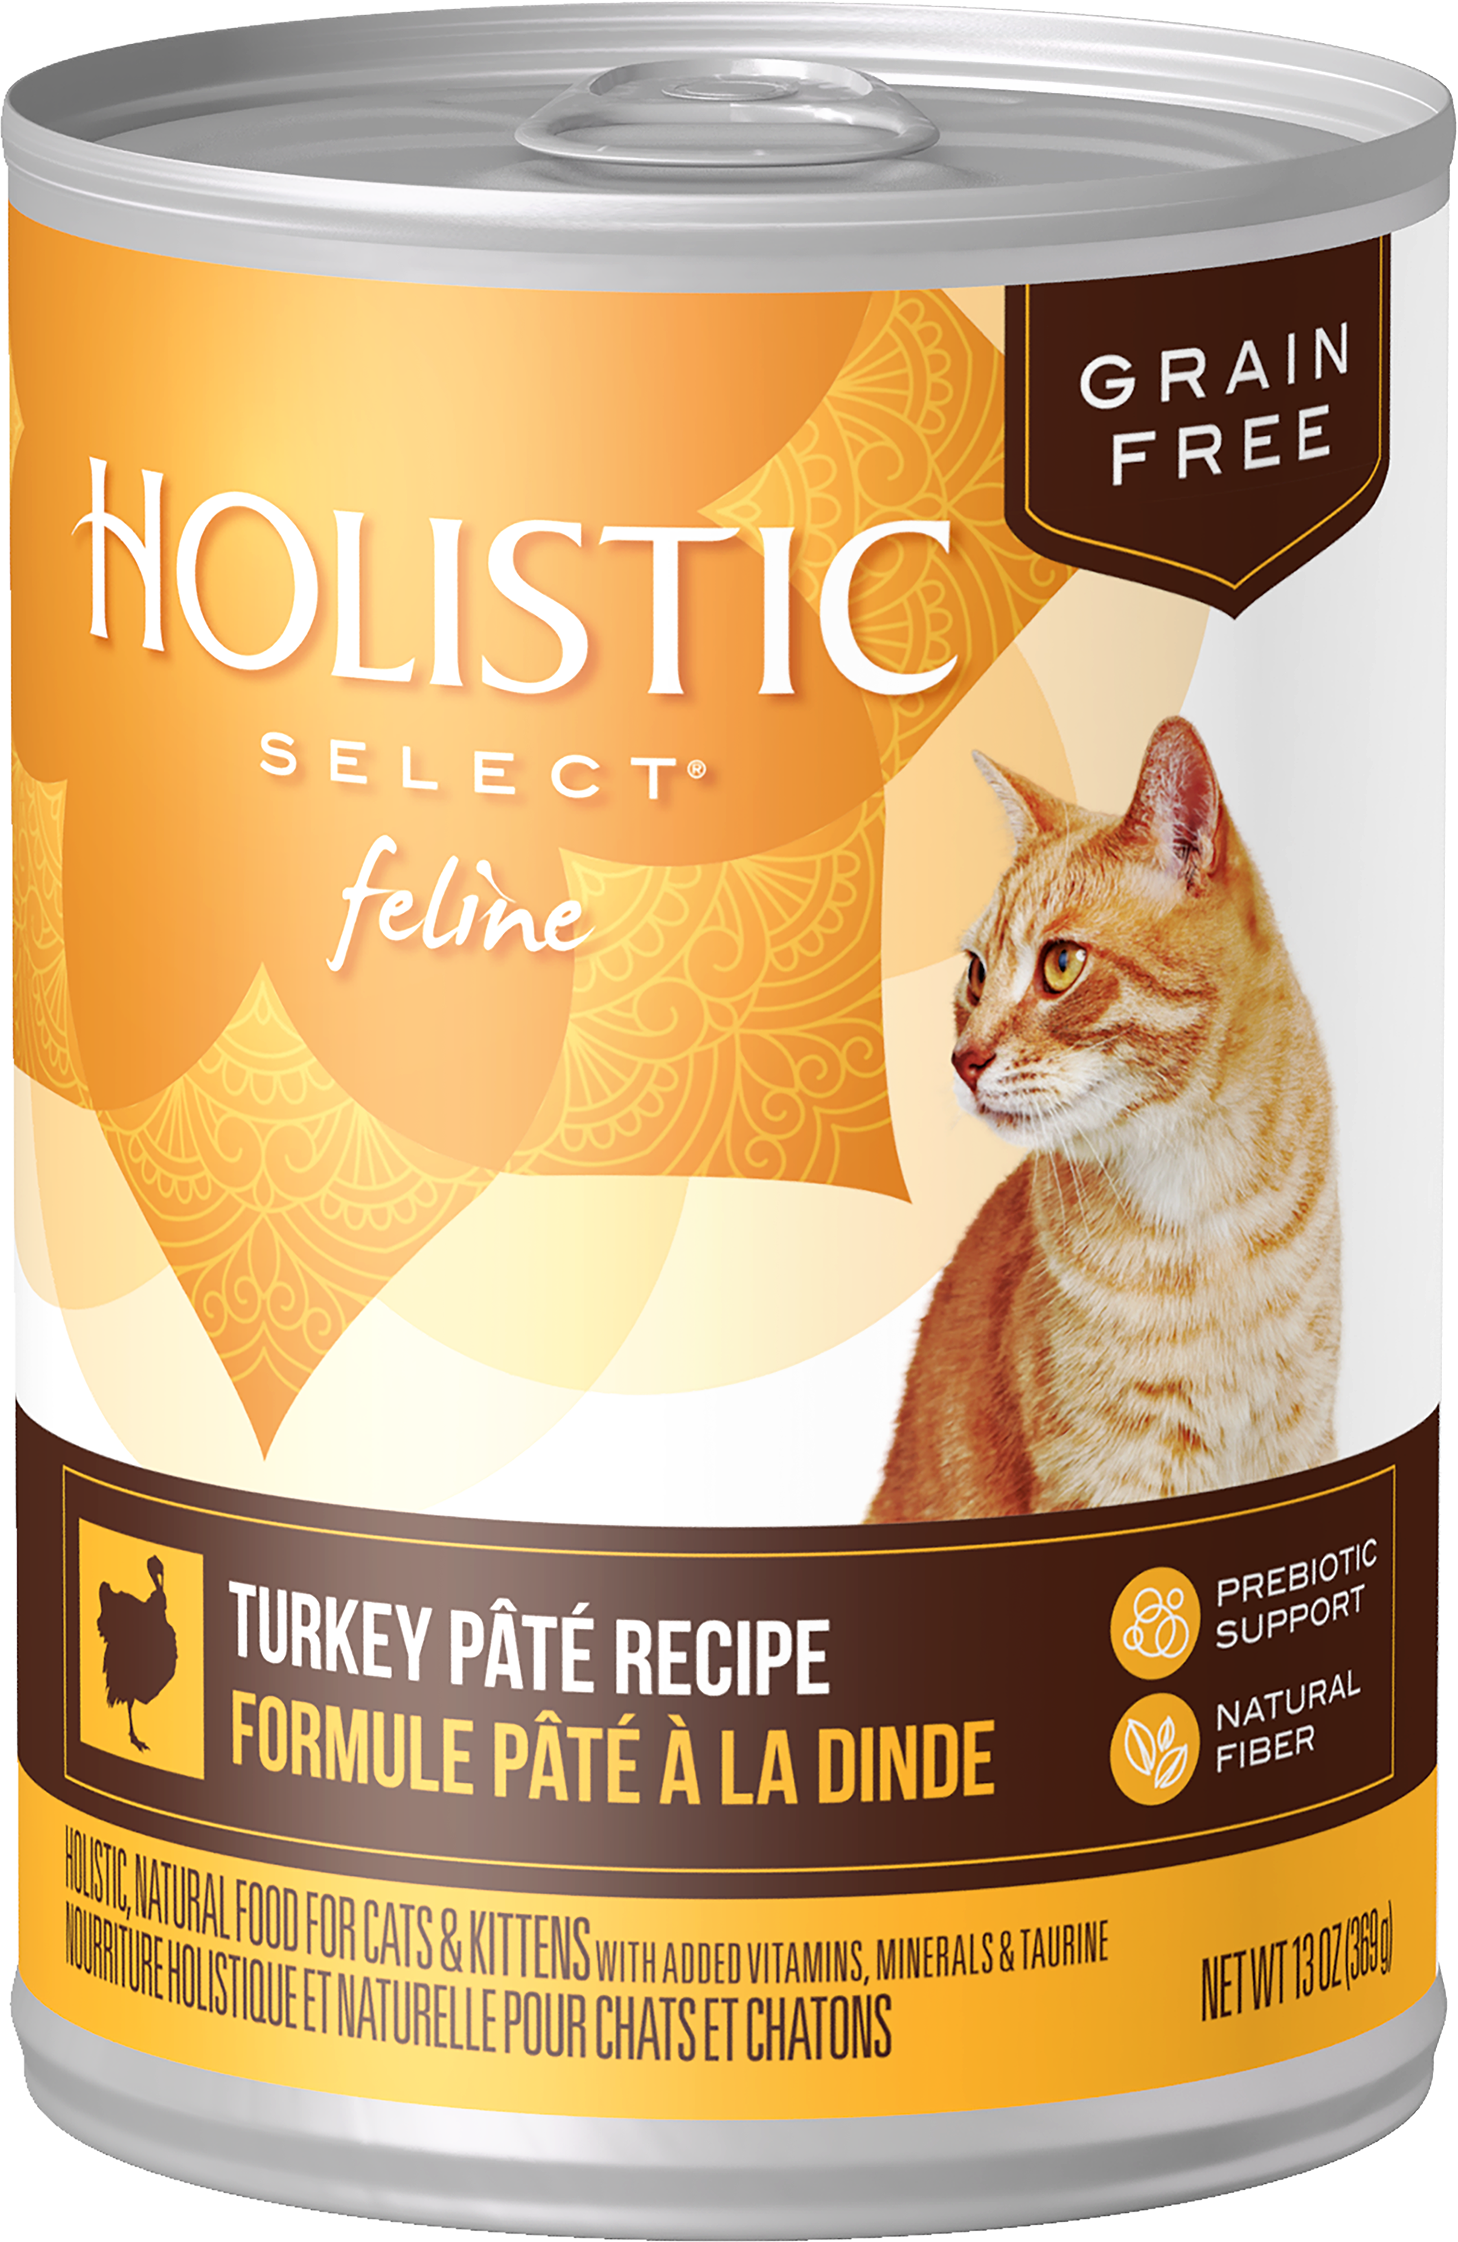 Grain Free Turkey Pâté Recipe product packaging image thumbnail 1